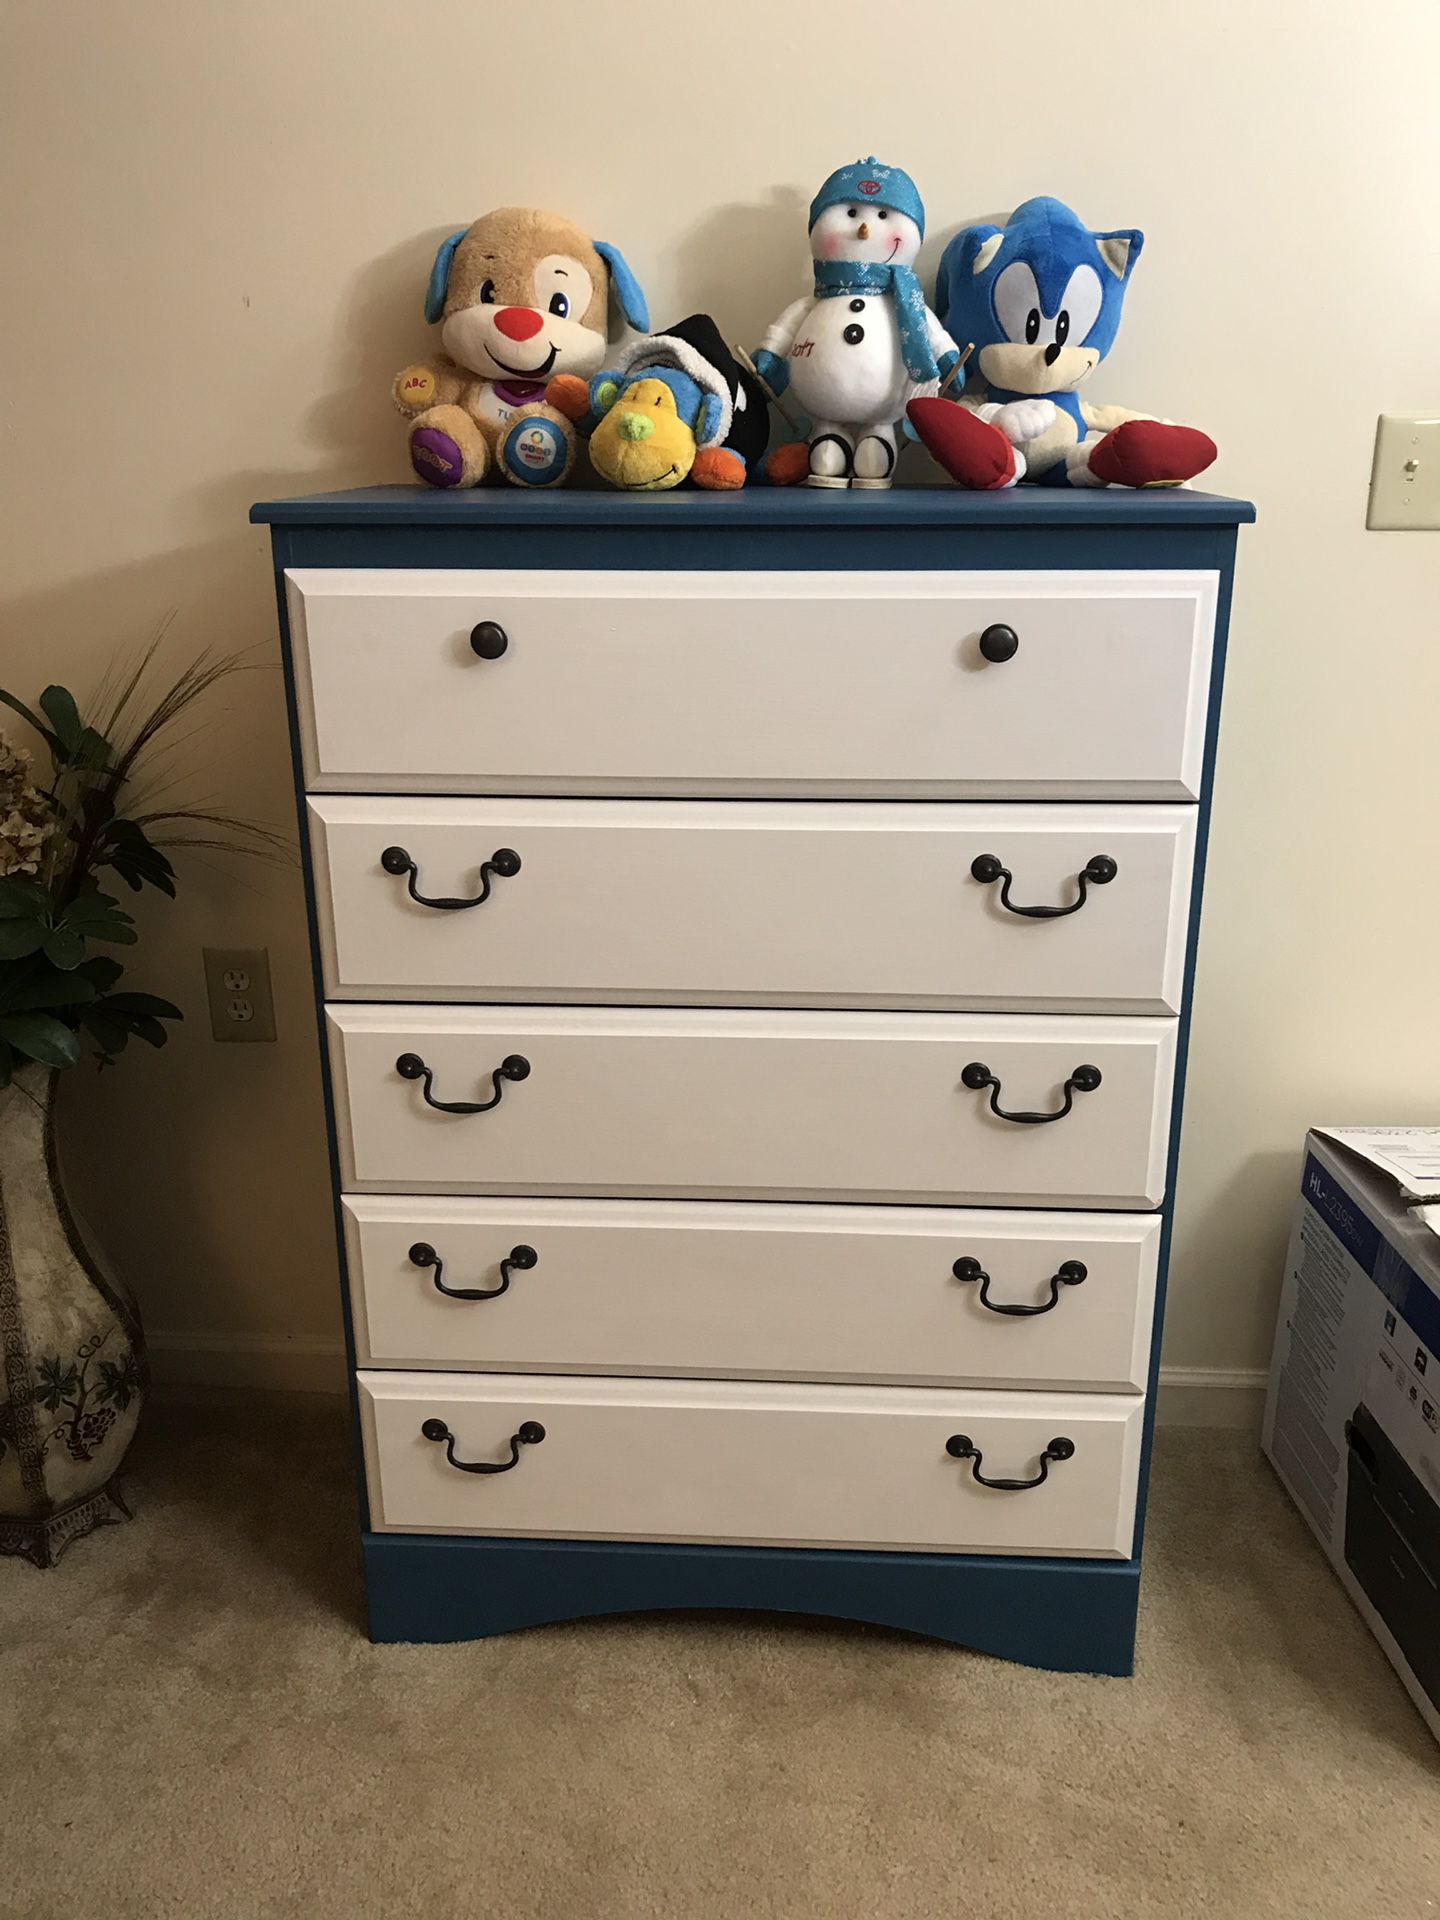 Teal blue/white 5-drawers dresser